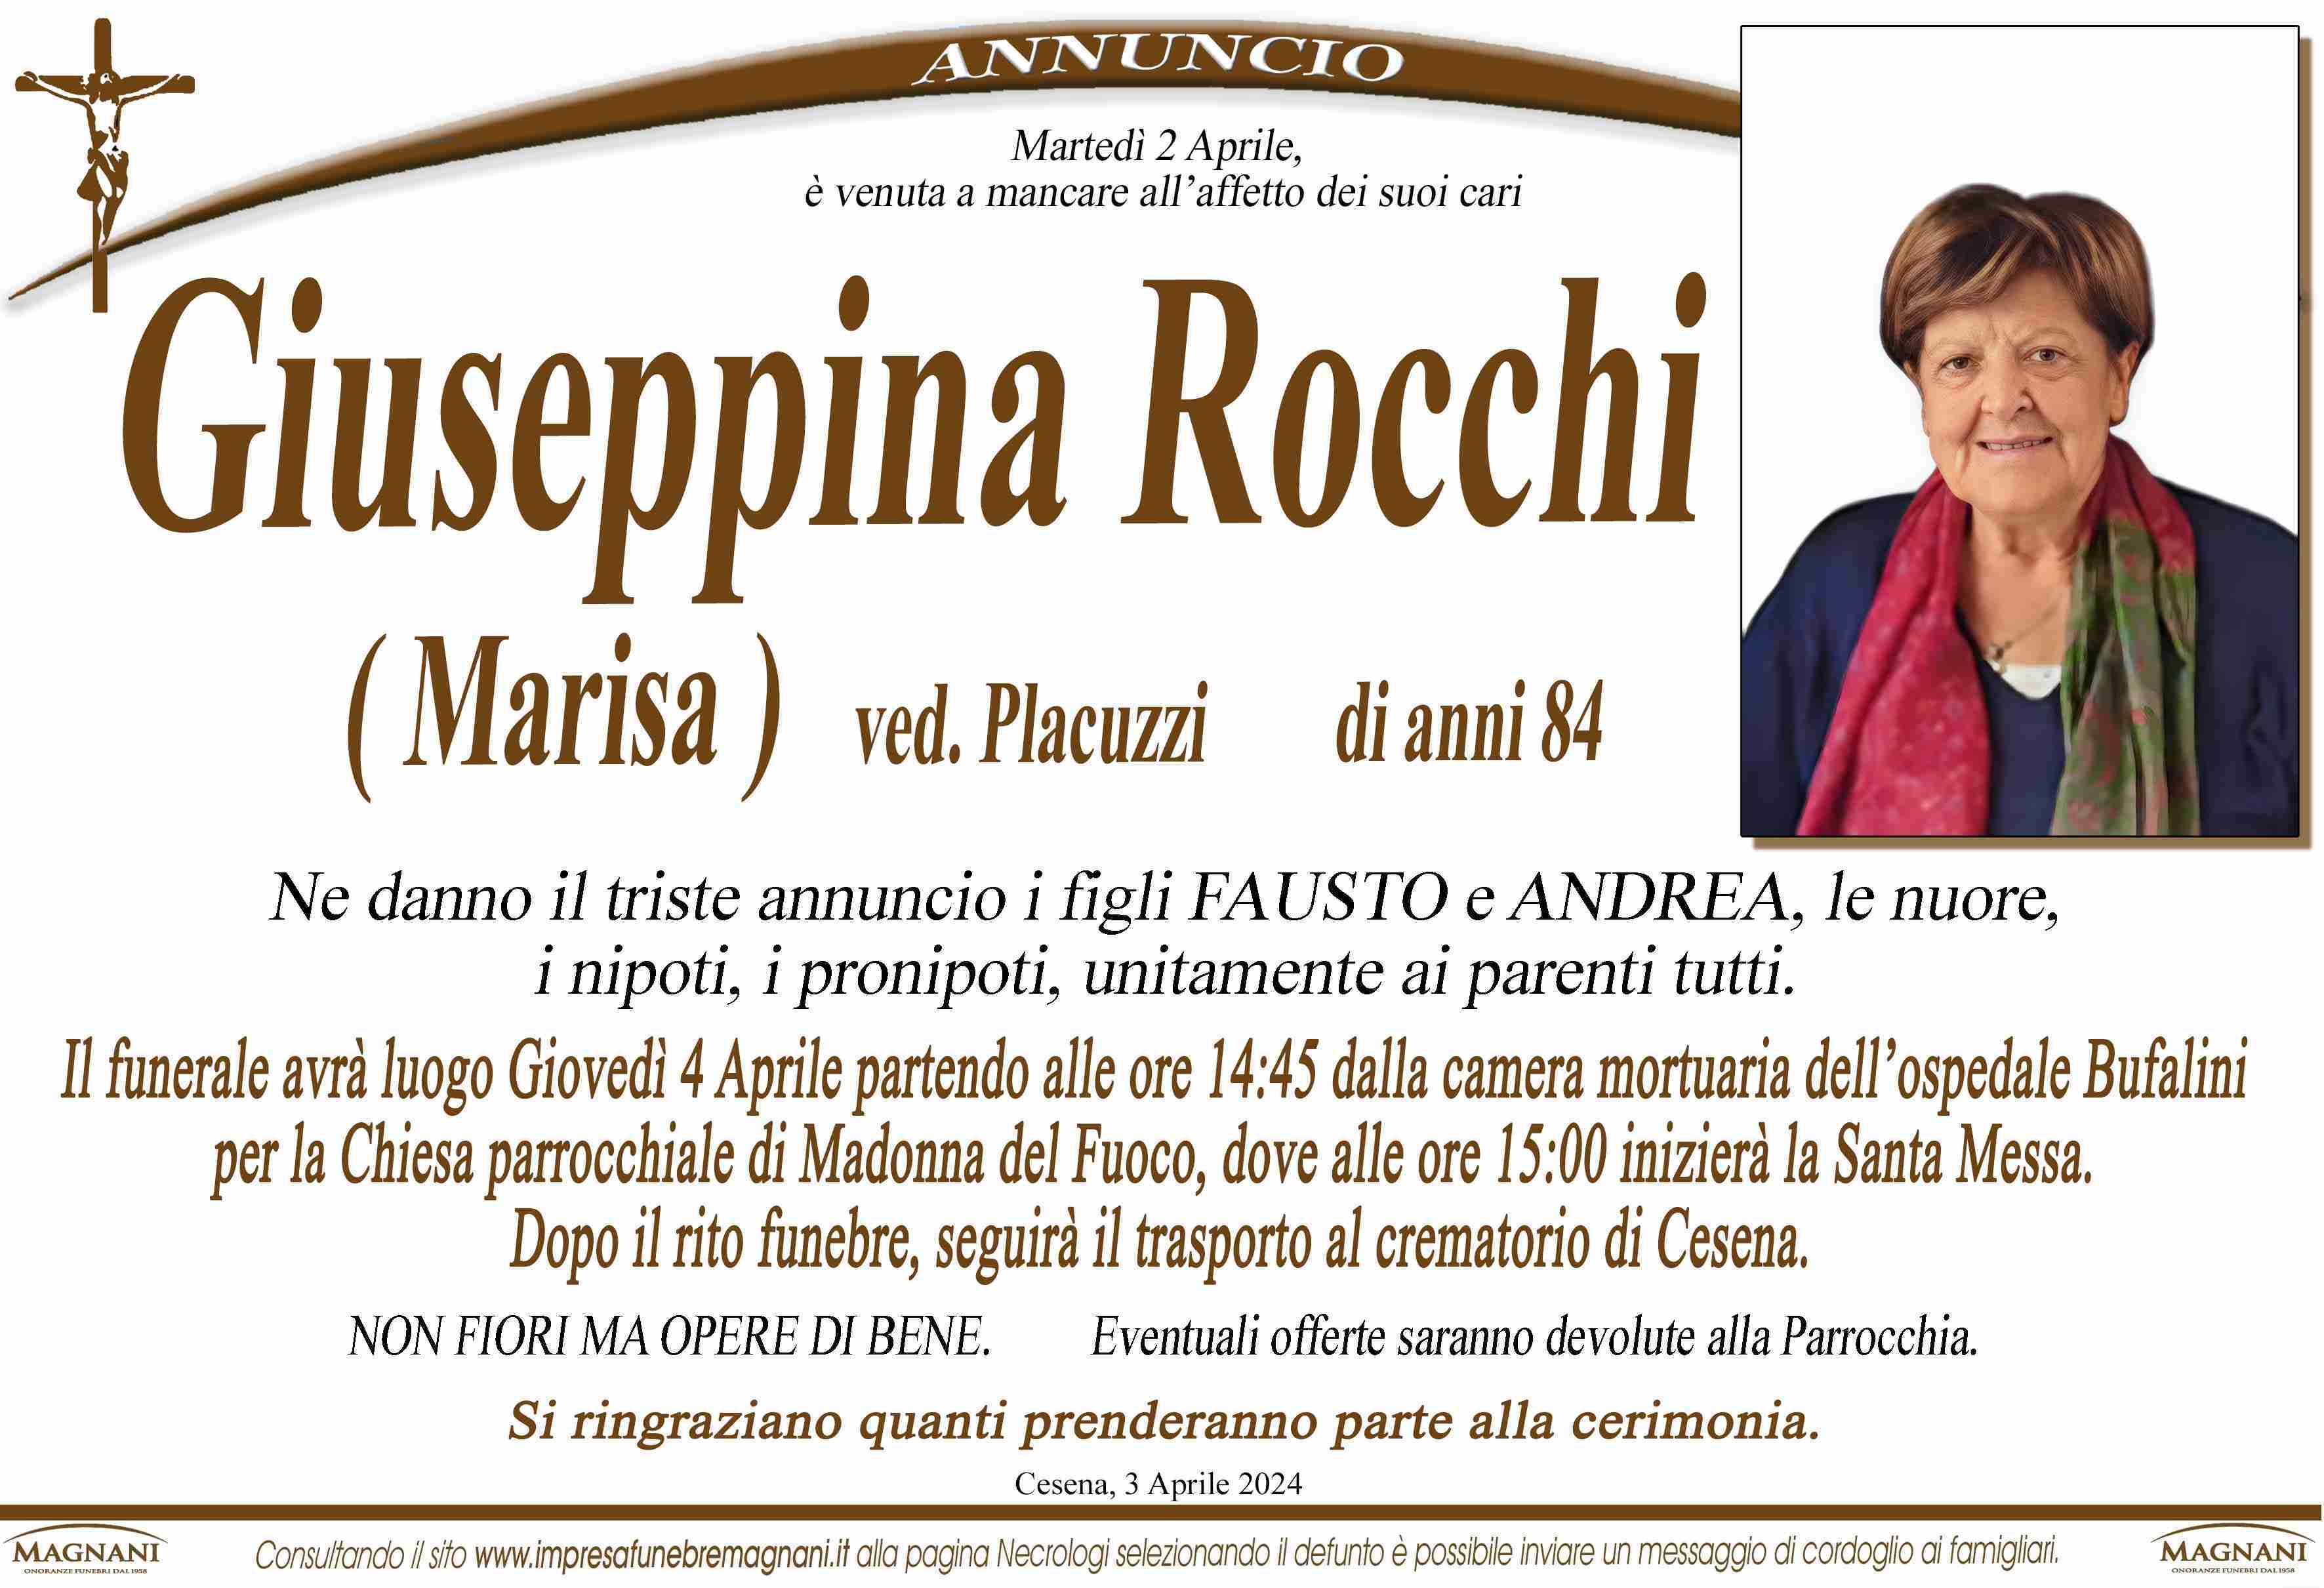 Giuseppina Rocchi (Marisa)